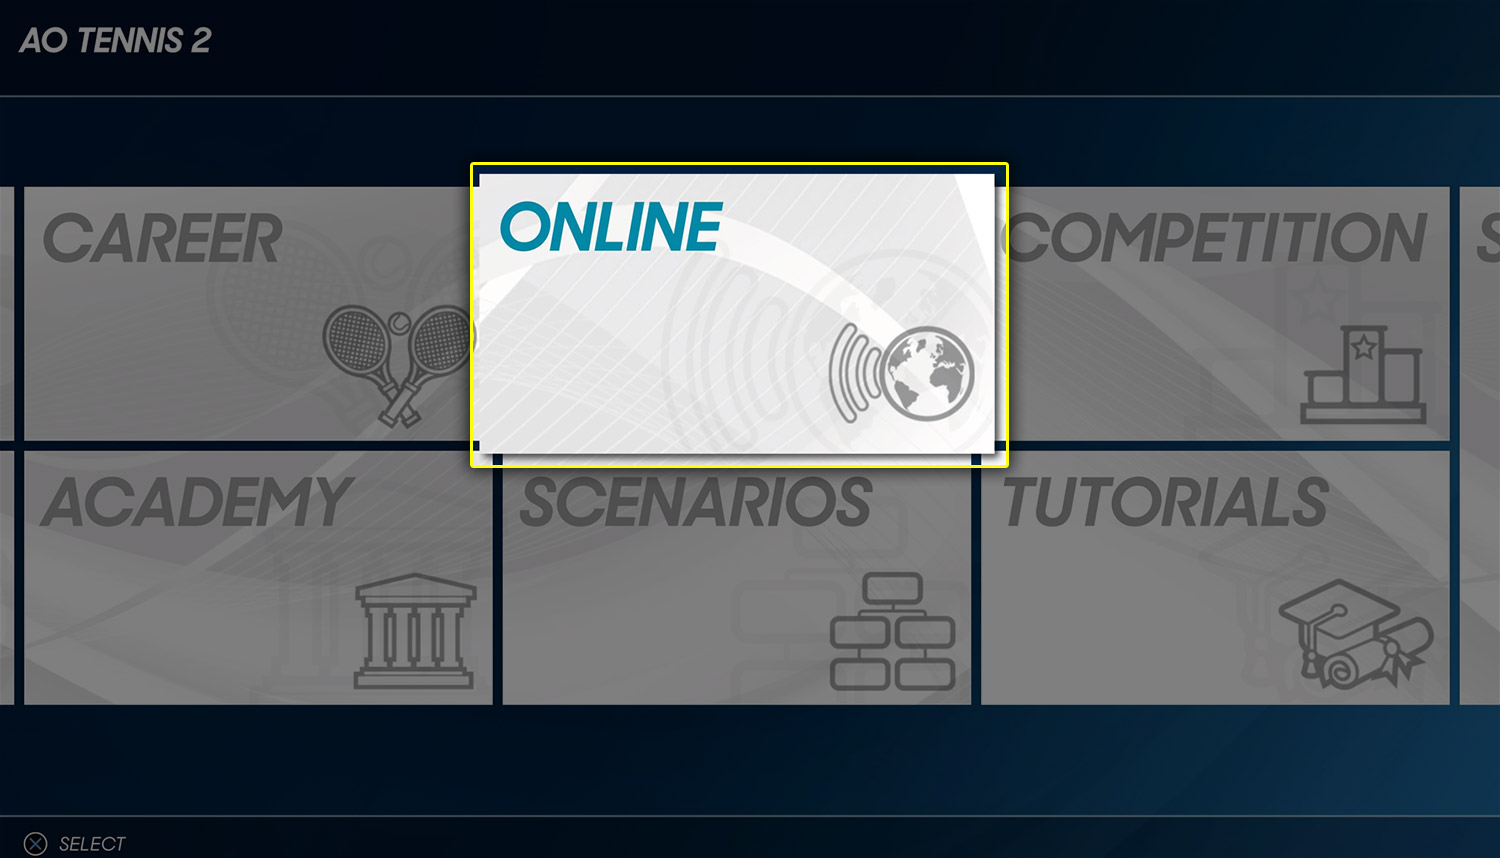 Online option